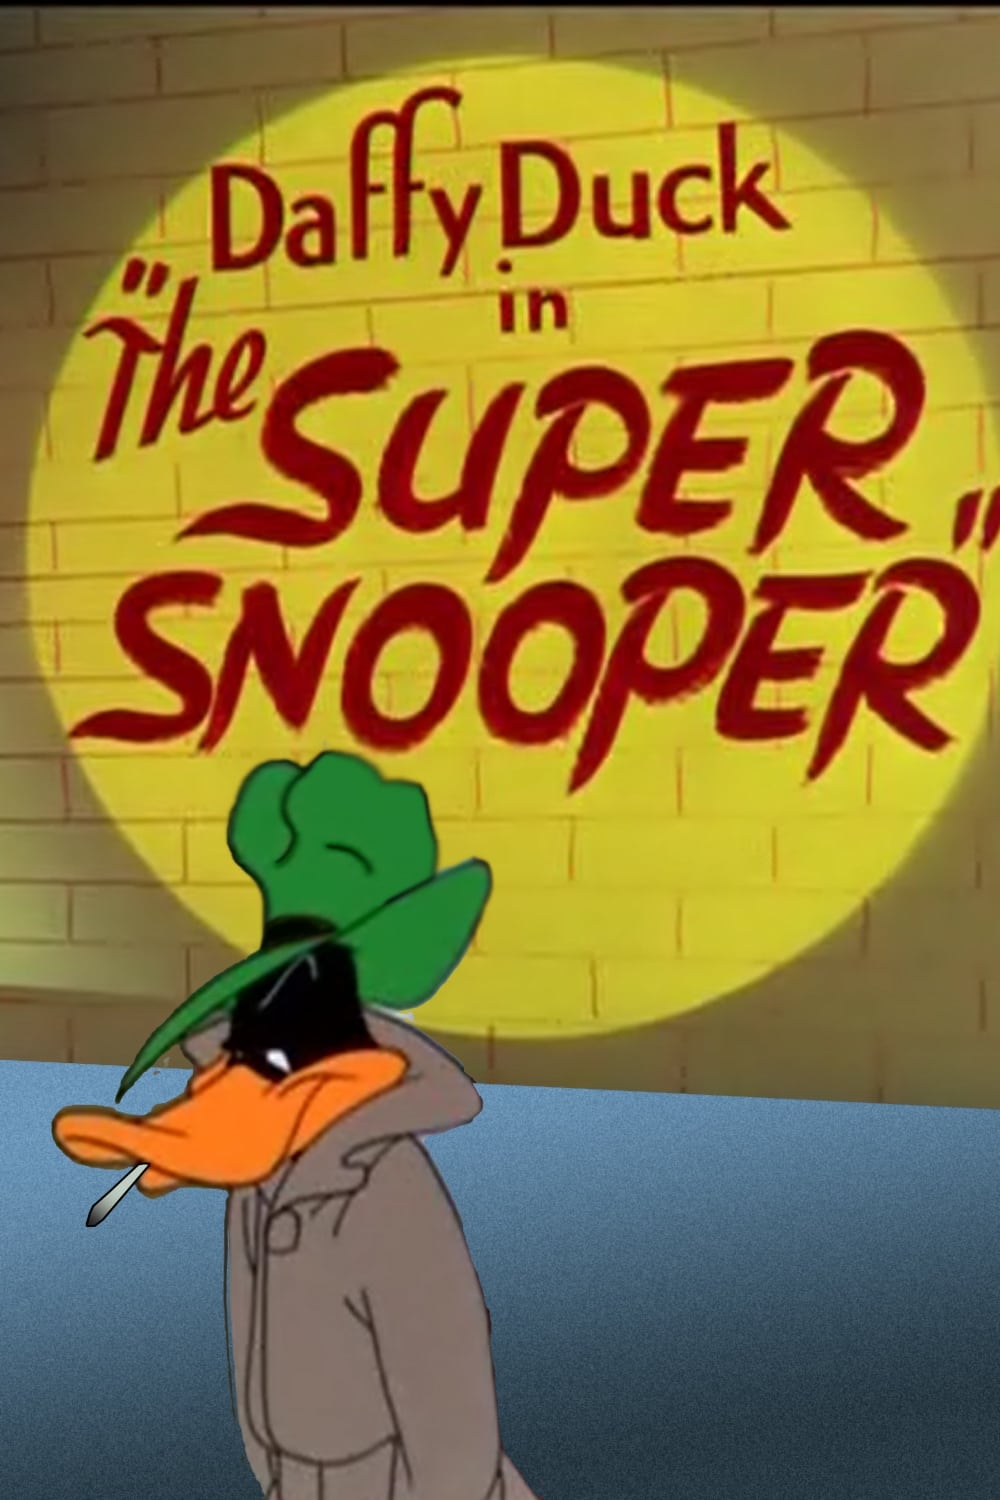 The Super Snooper